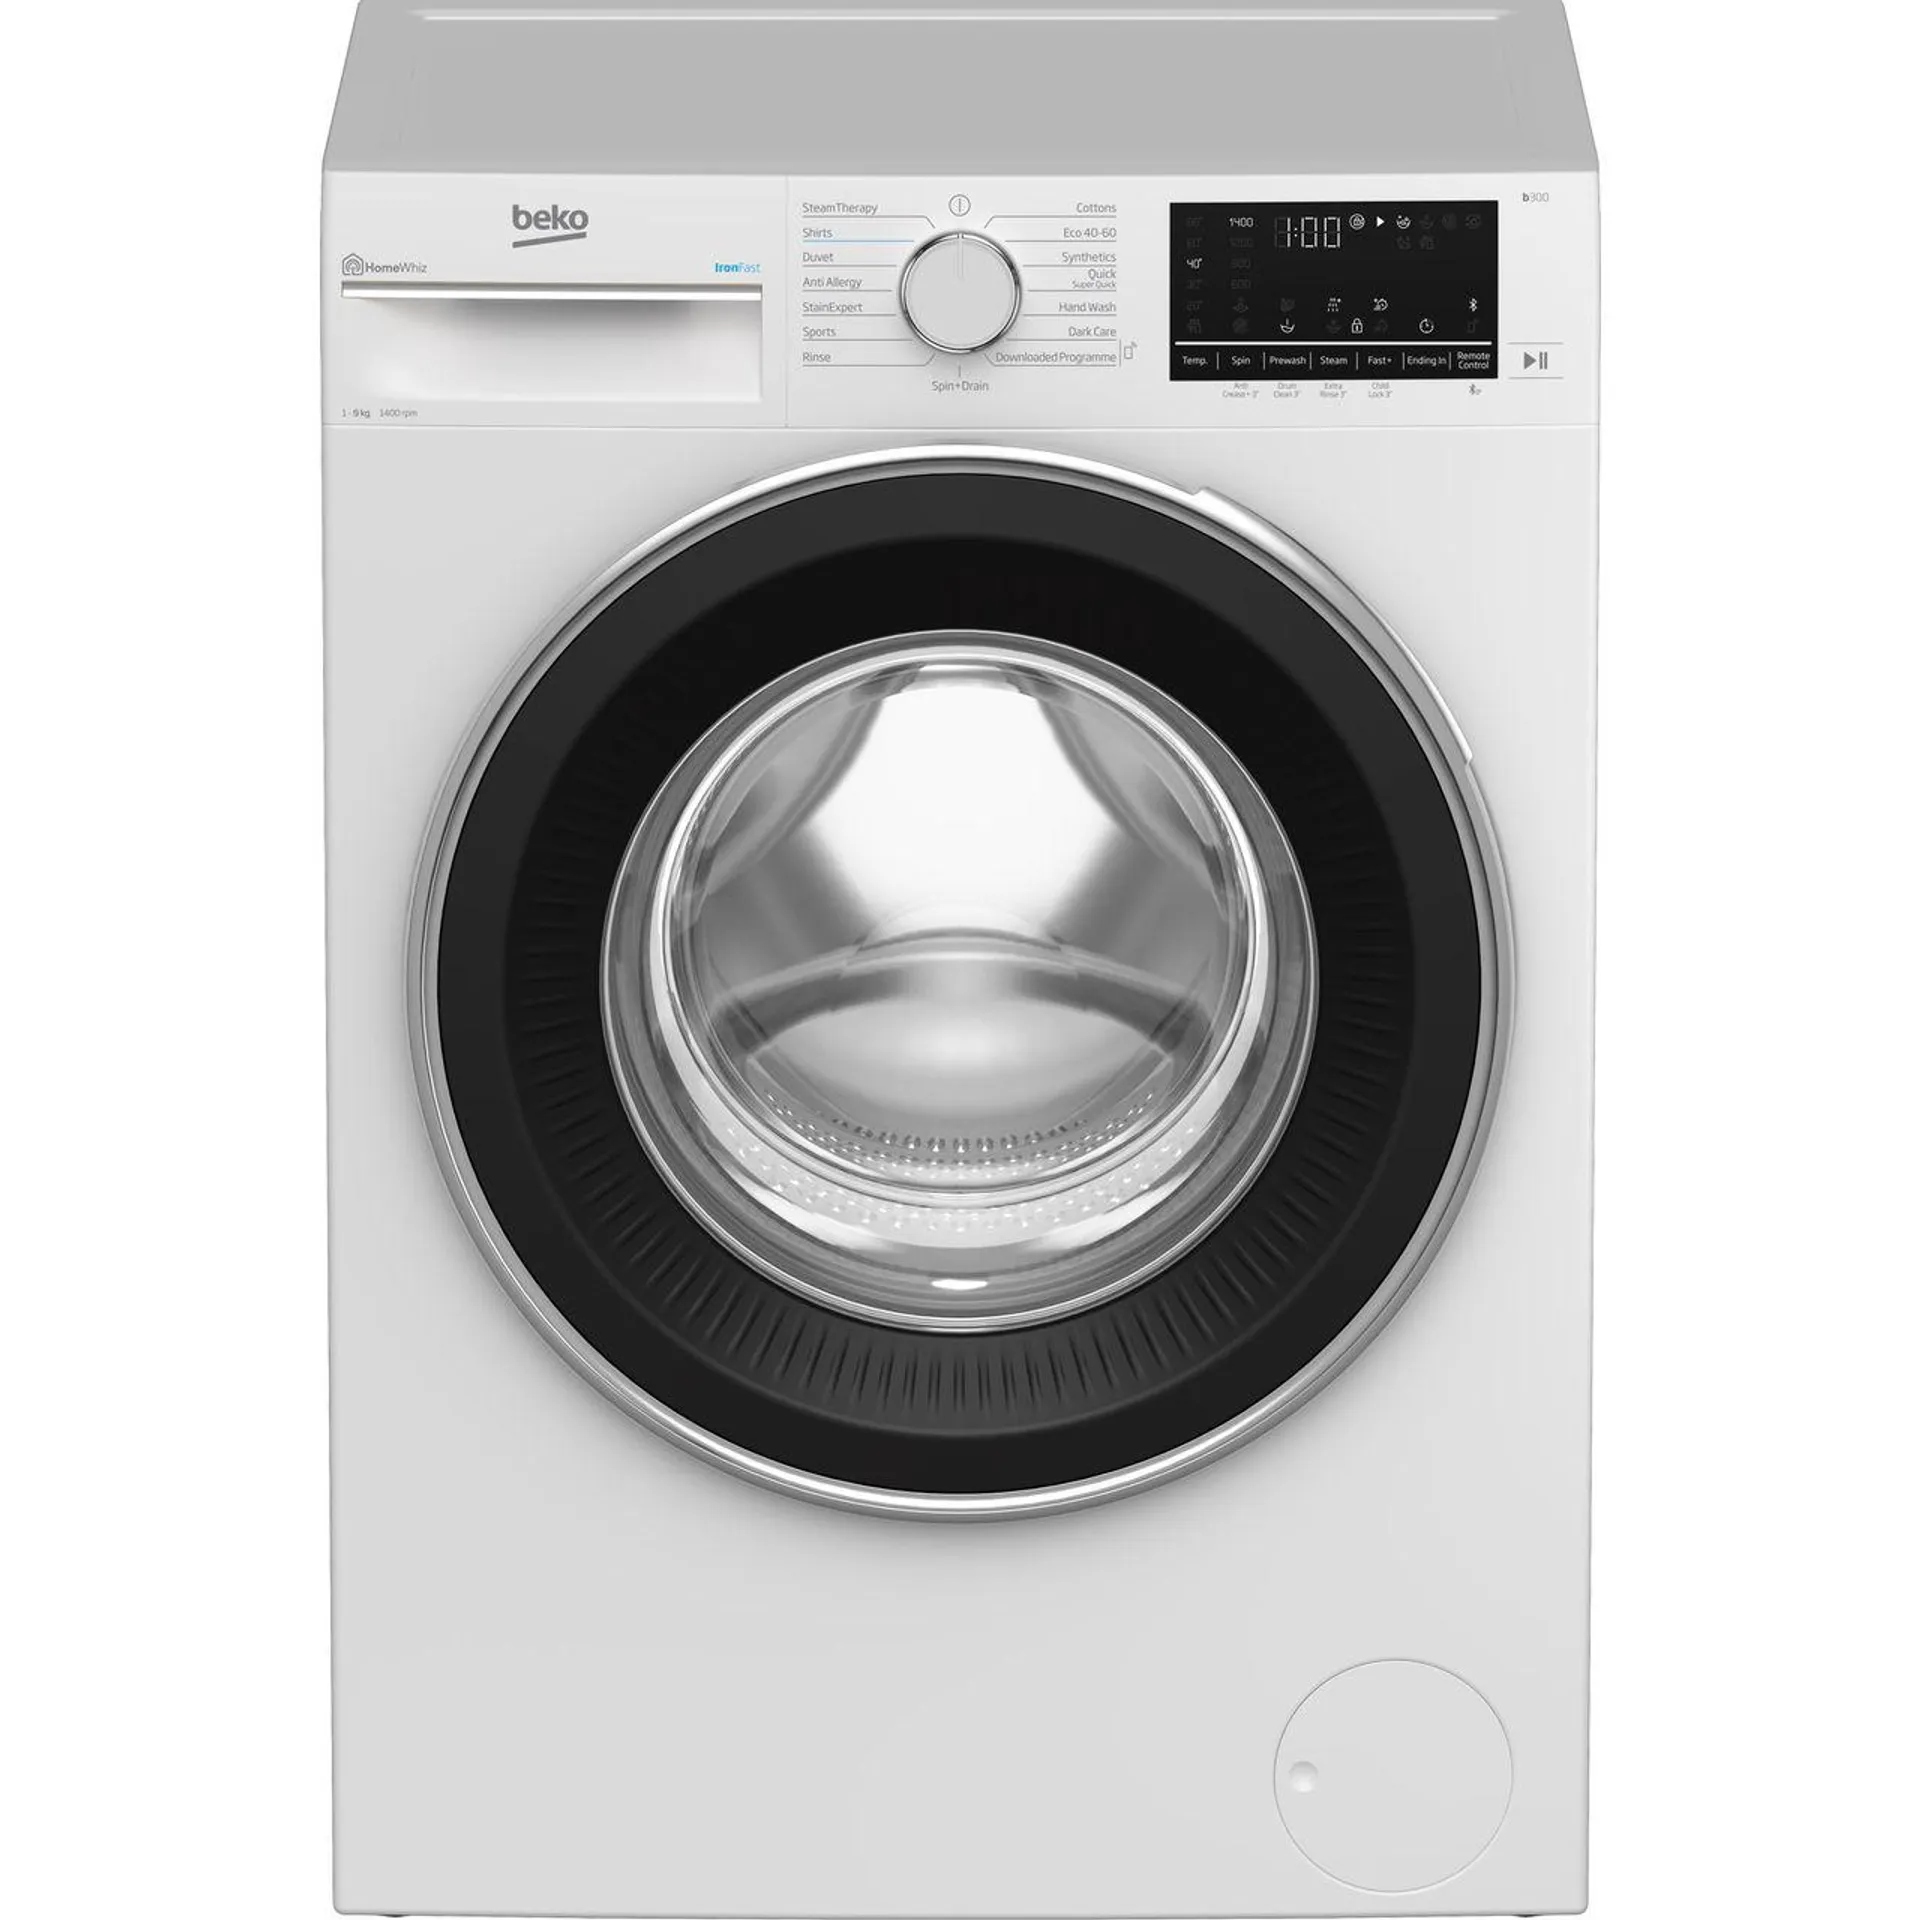 Beko B3W5942IW 9kg Washing Machine with 1400 rpm - White - B Rated